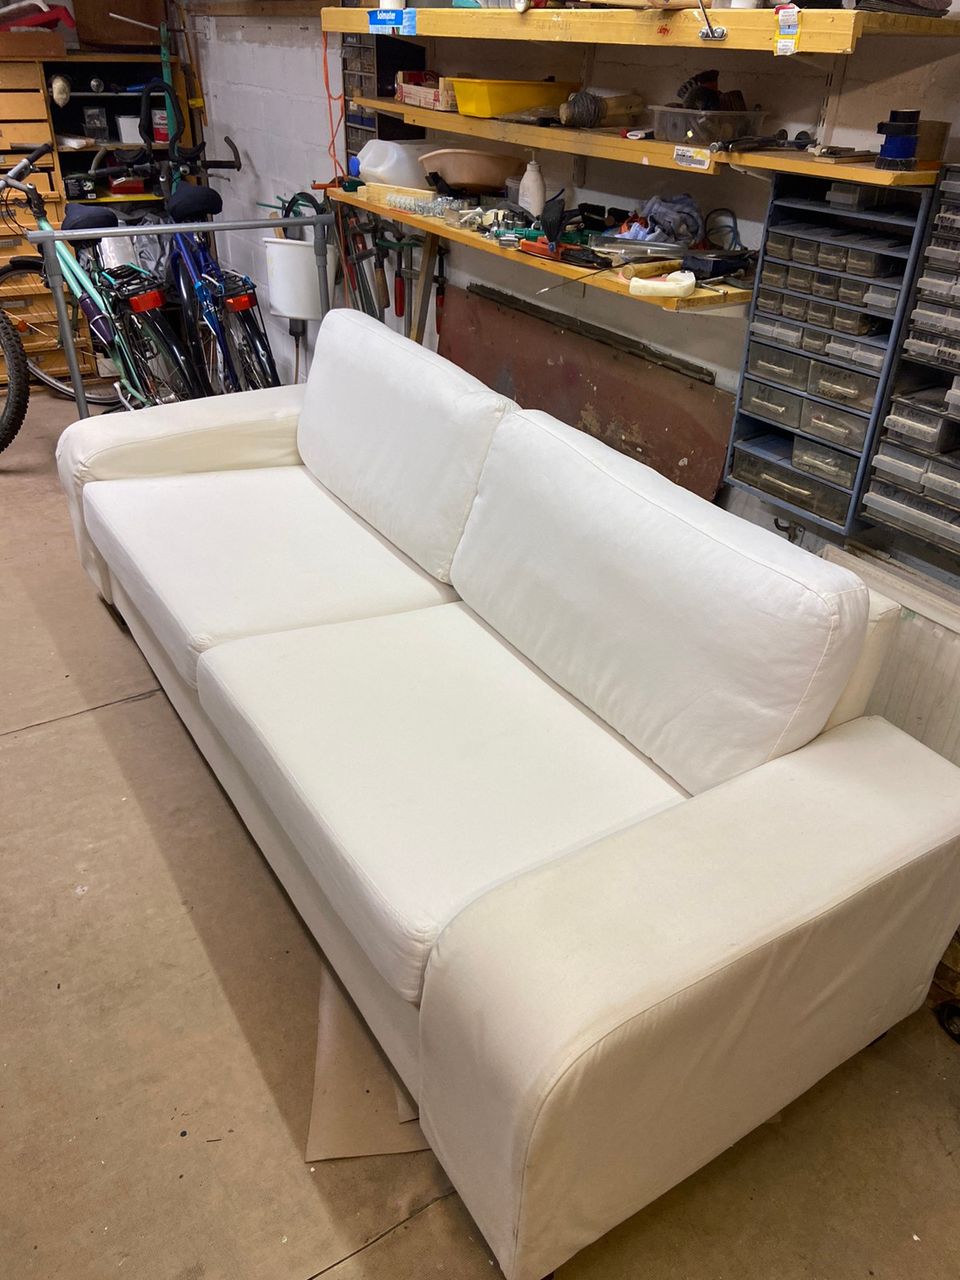 Valkoinen sohva